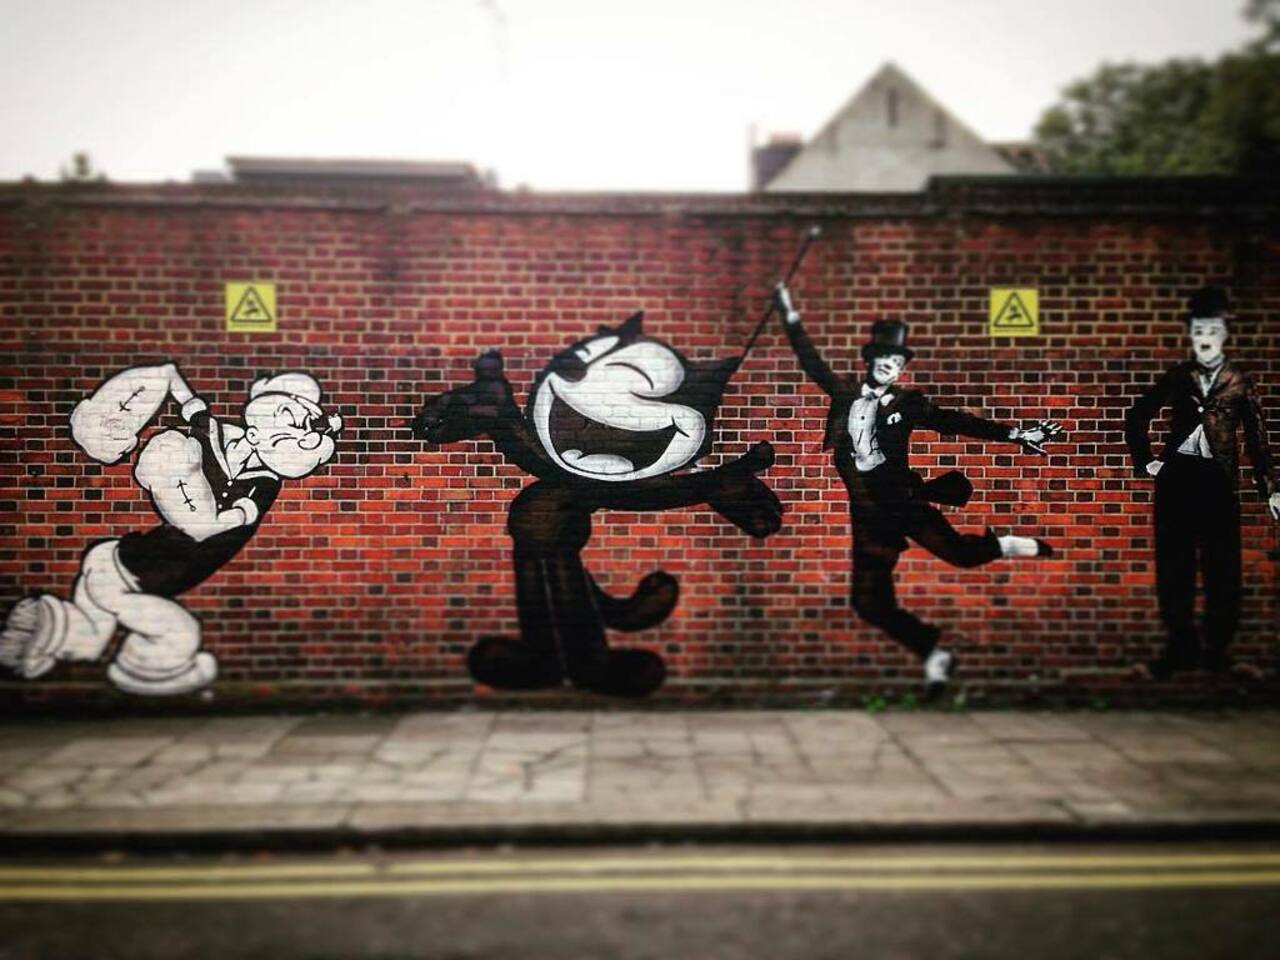 RT @StArtEverywhere: #StreetArt #London #Popeye #felixthecat #felix #fredastaire #charliechaplin #streetartlondon #graffitiart #Graffiti… http://t.co/Z7fZ2PAOkU